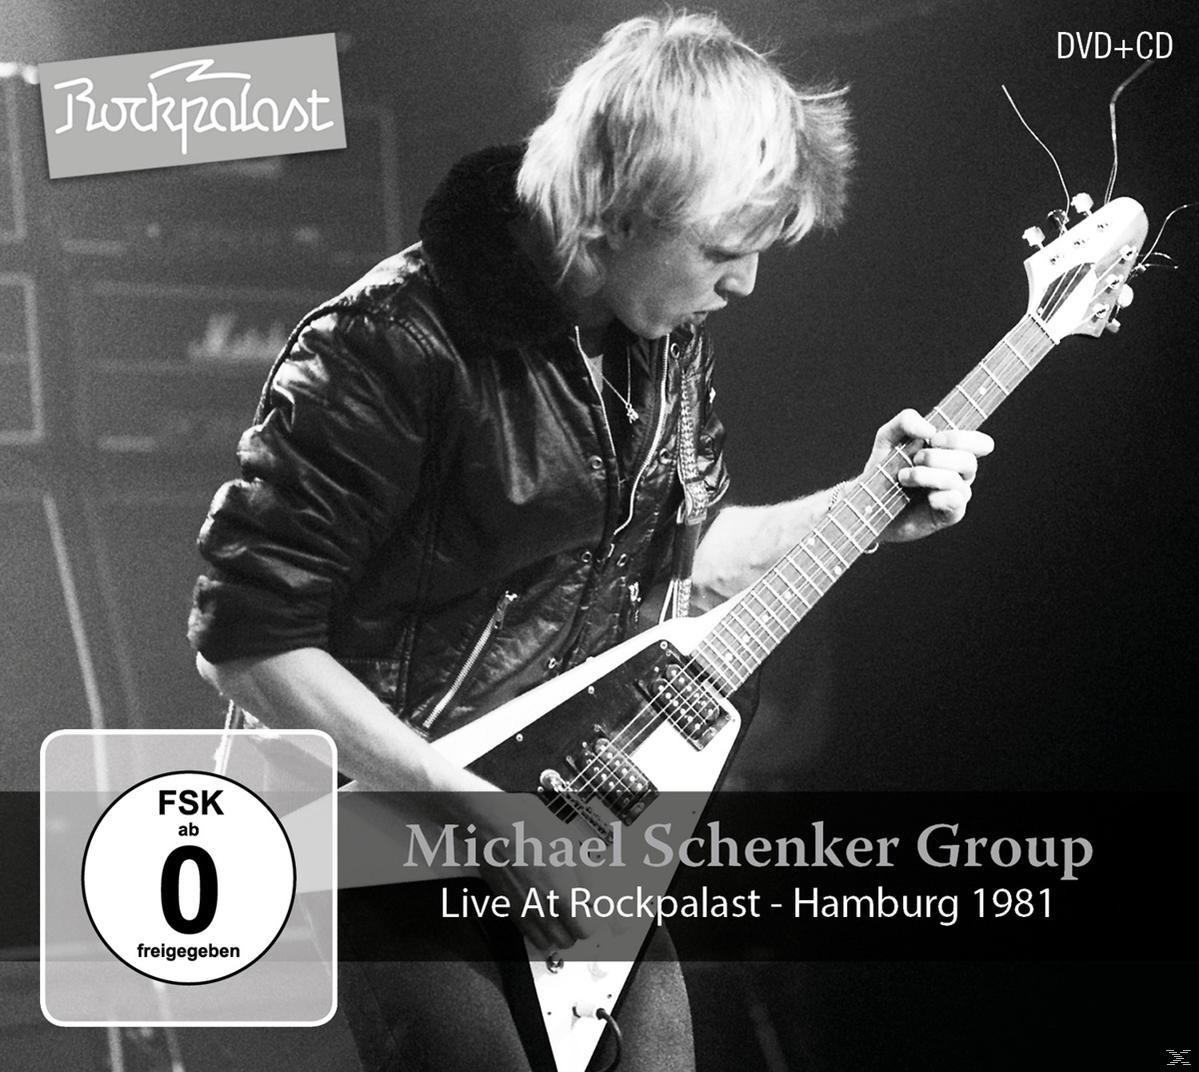 Group At Michael Rockpalast-Hamburg DVD Video) Schenker (CD Live - 1981 + -